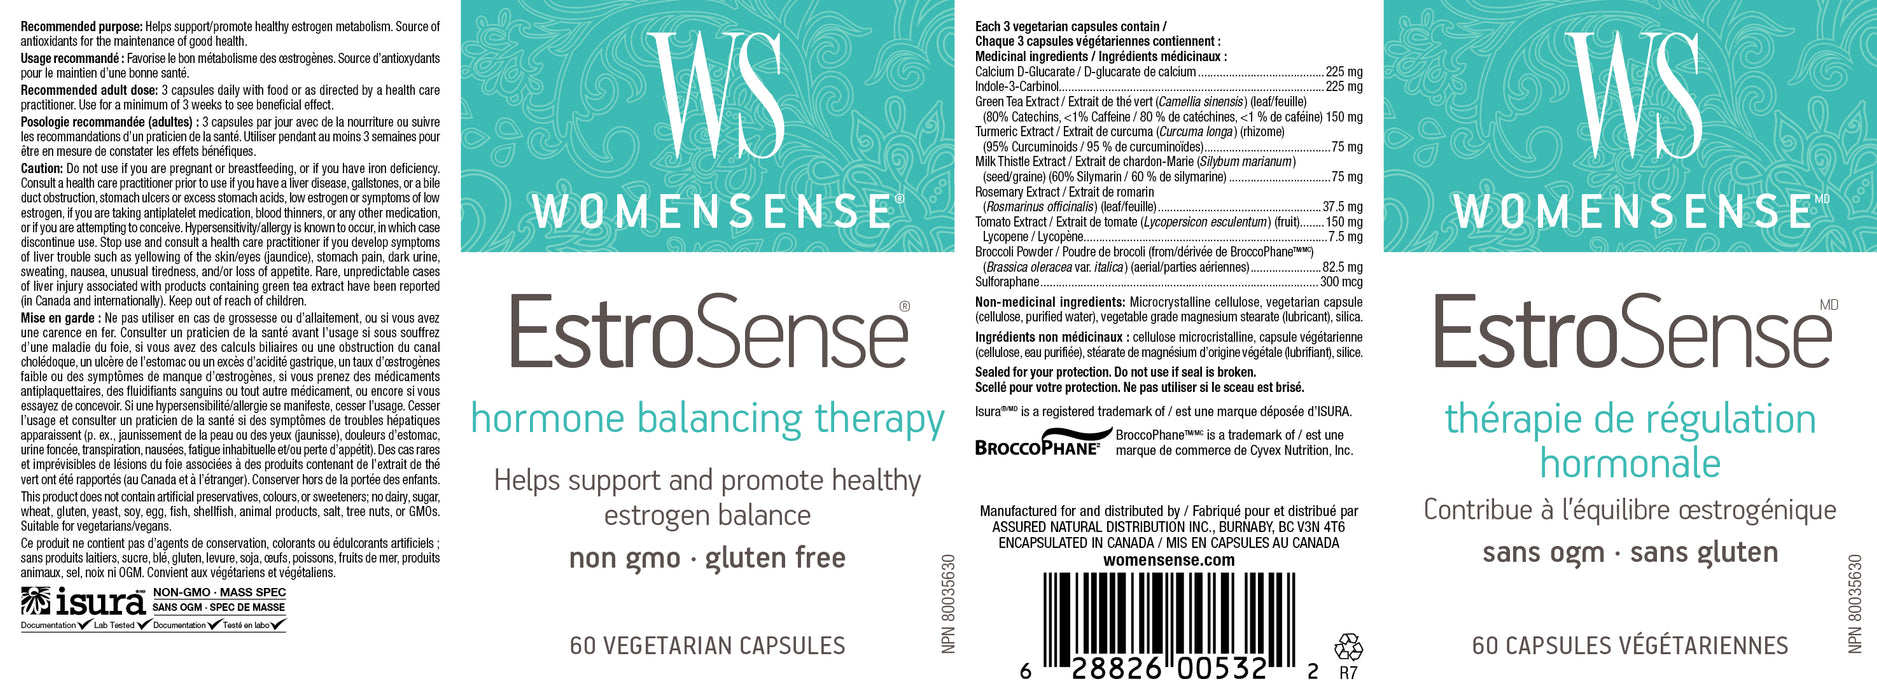 WomenSense EstroSense® 60 Veg Capsules